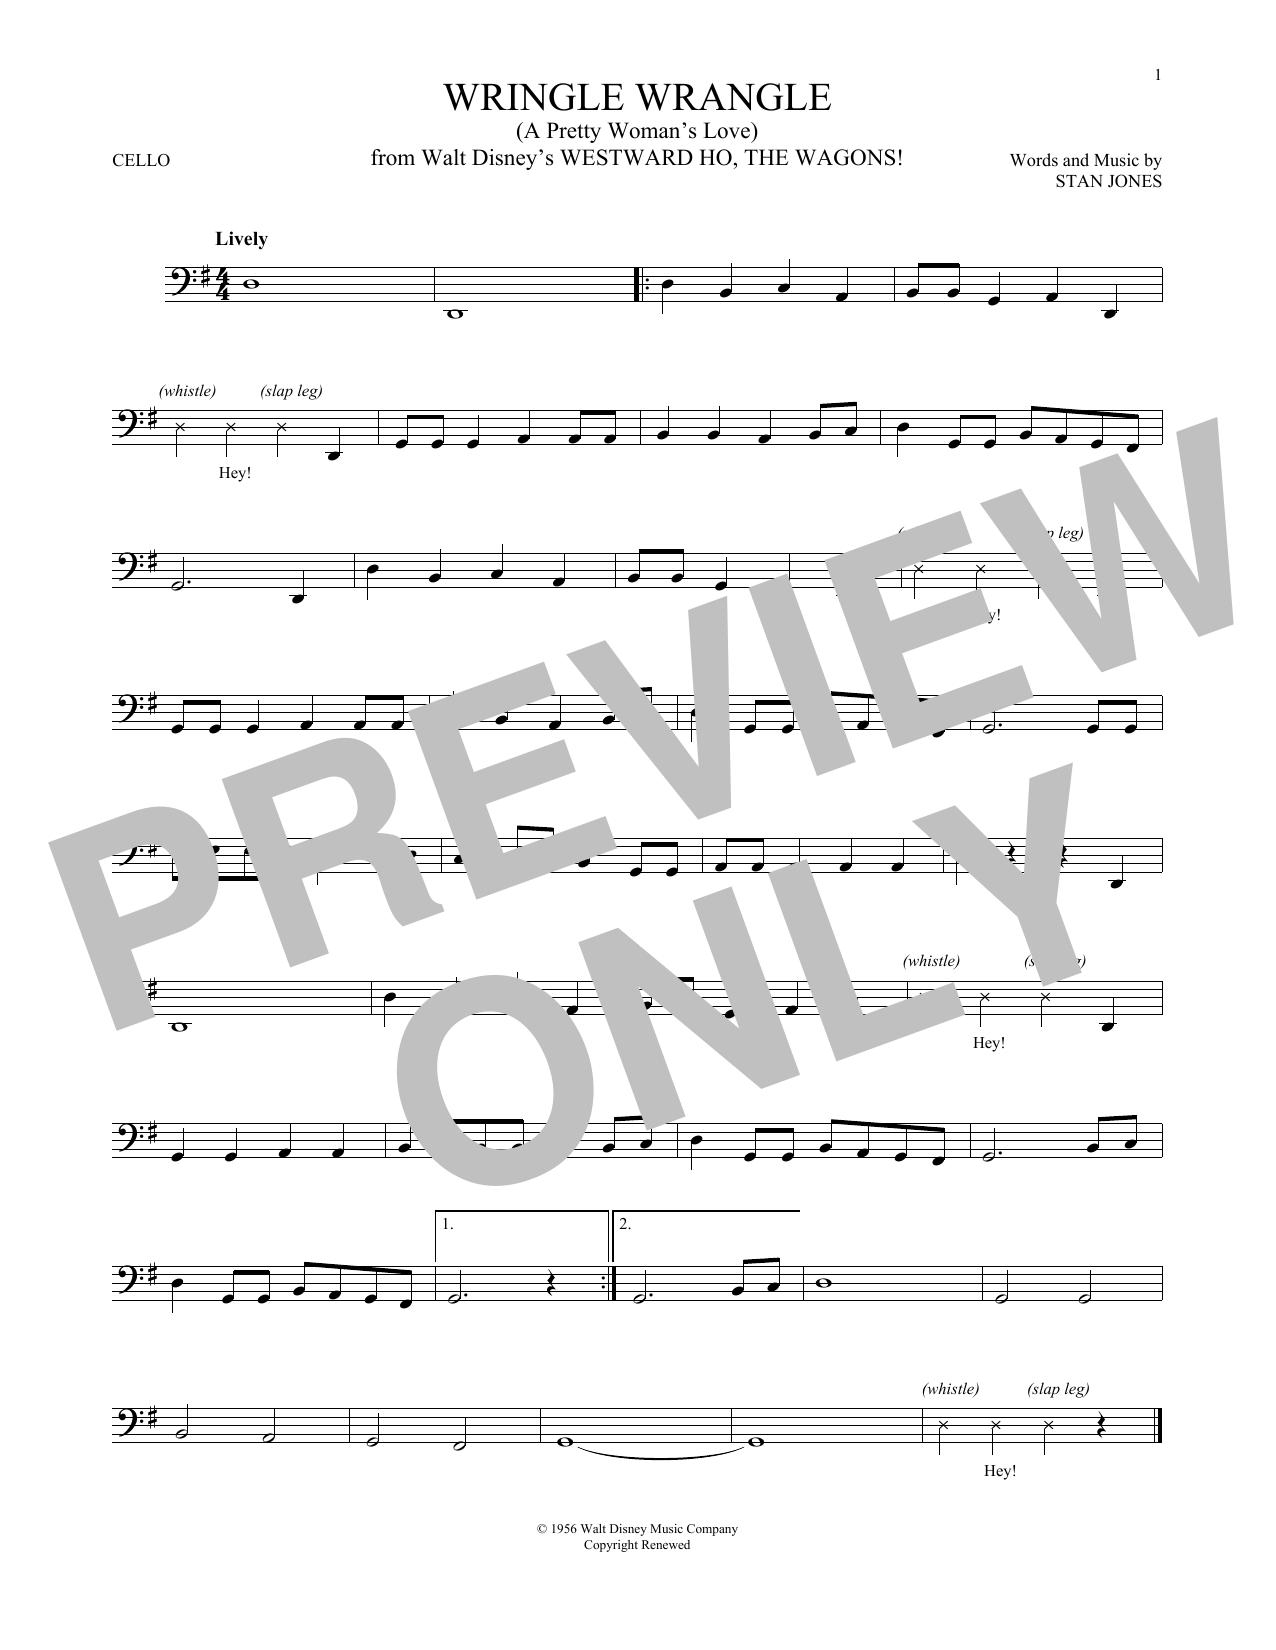 Stan Jones Wringle Wrangle (A Pretty Woman's Love) Sheet Music Notes & Chords for Cello - Download or Print PDF